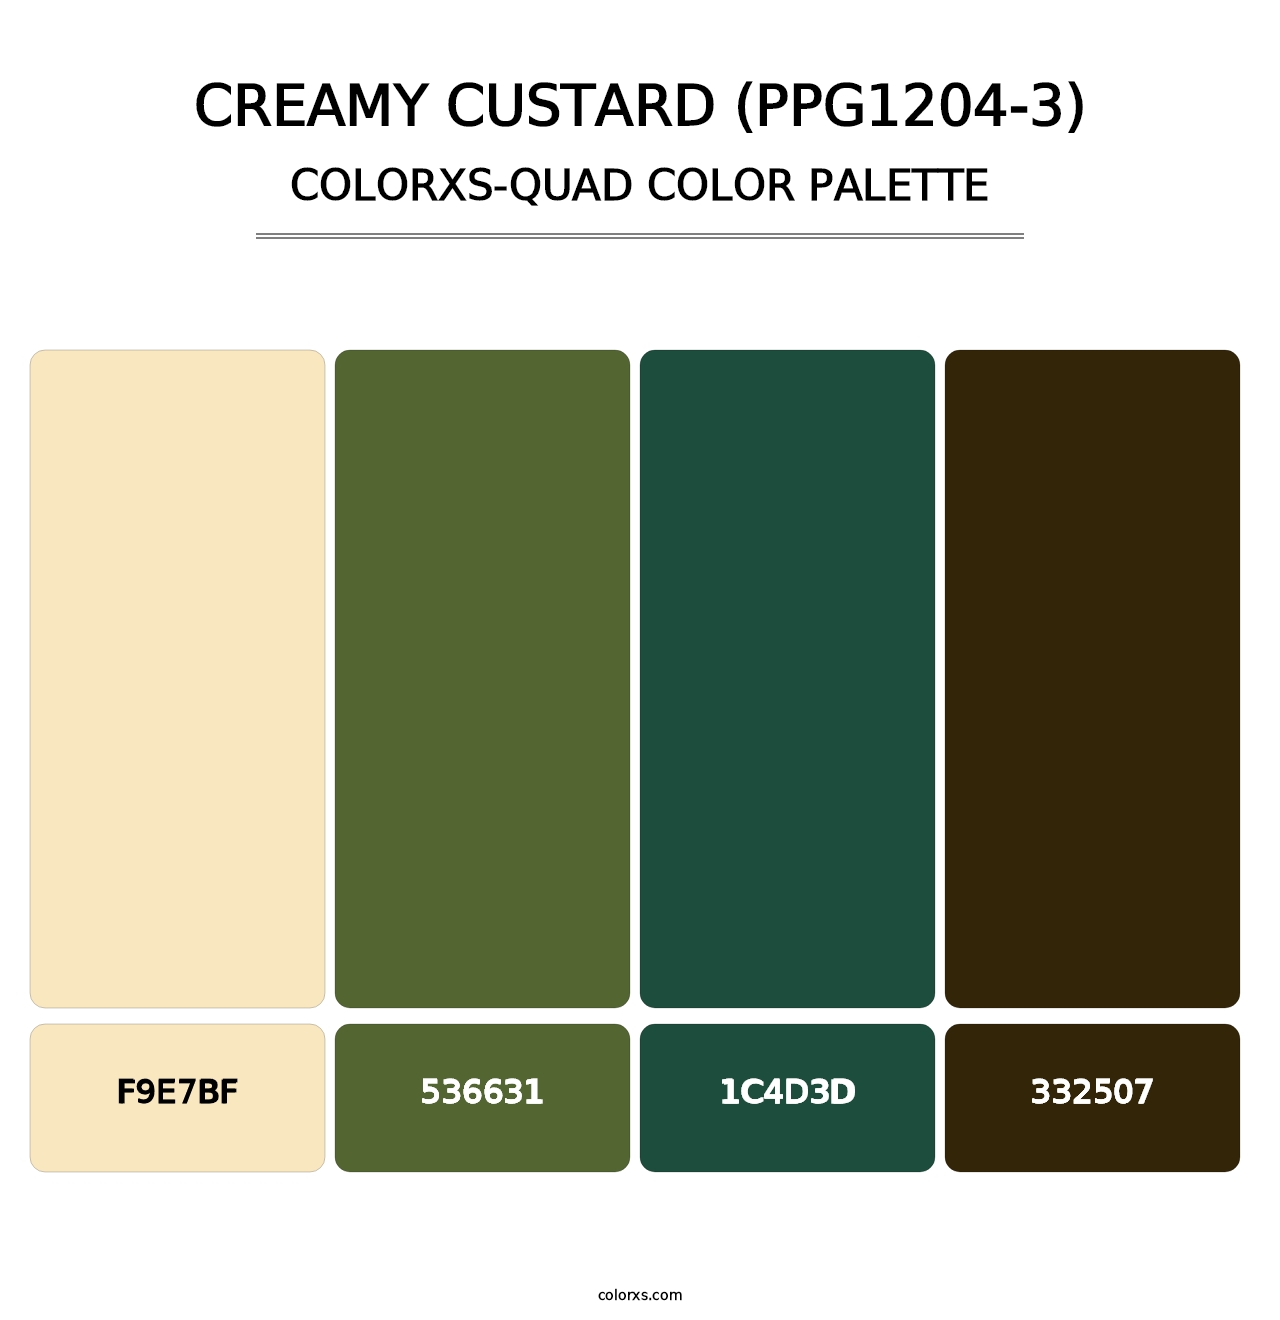 Creamy Custard (PPG1204-3) - Colorxs Quad Palette